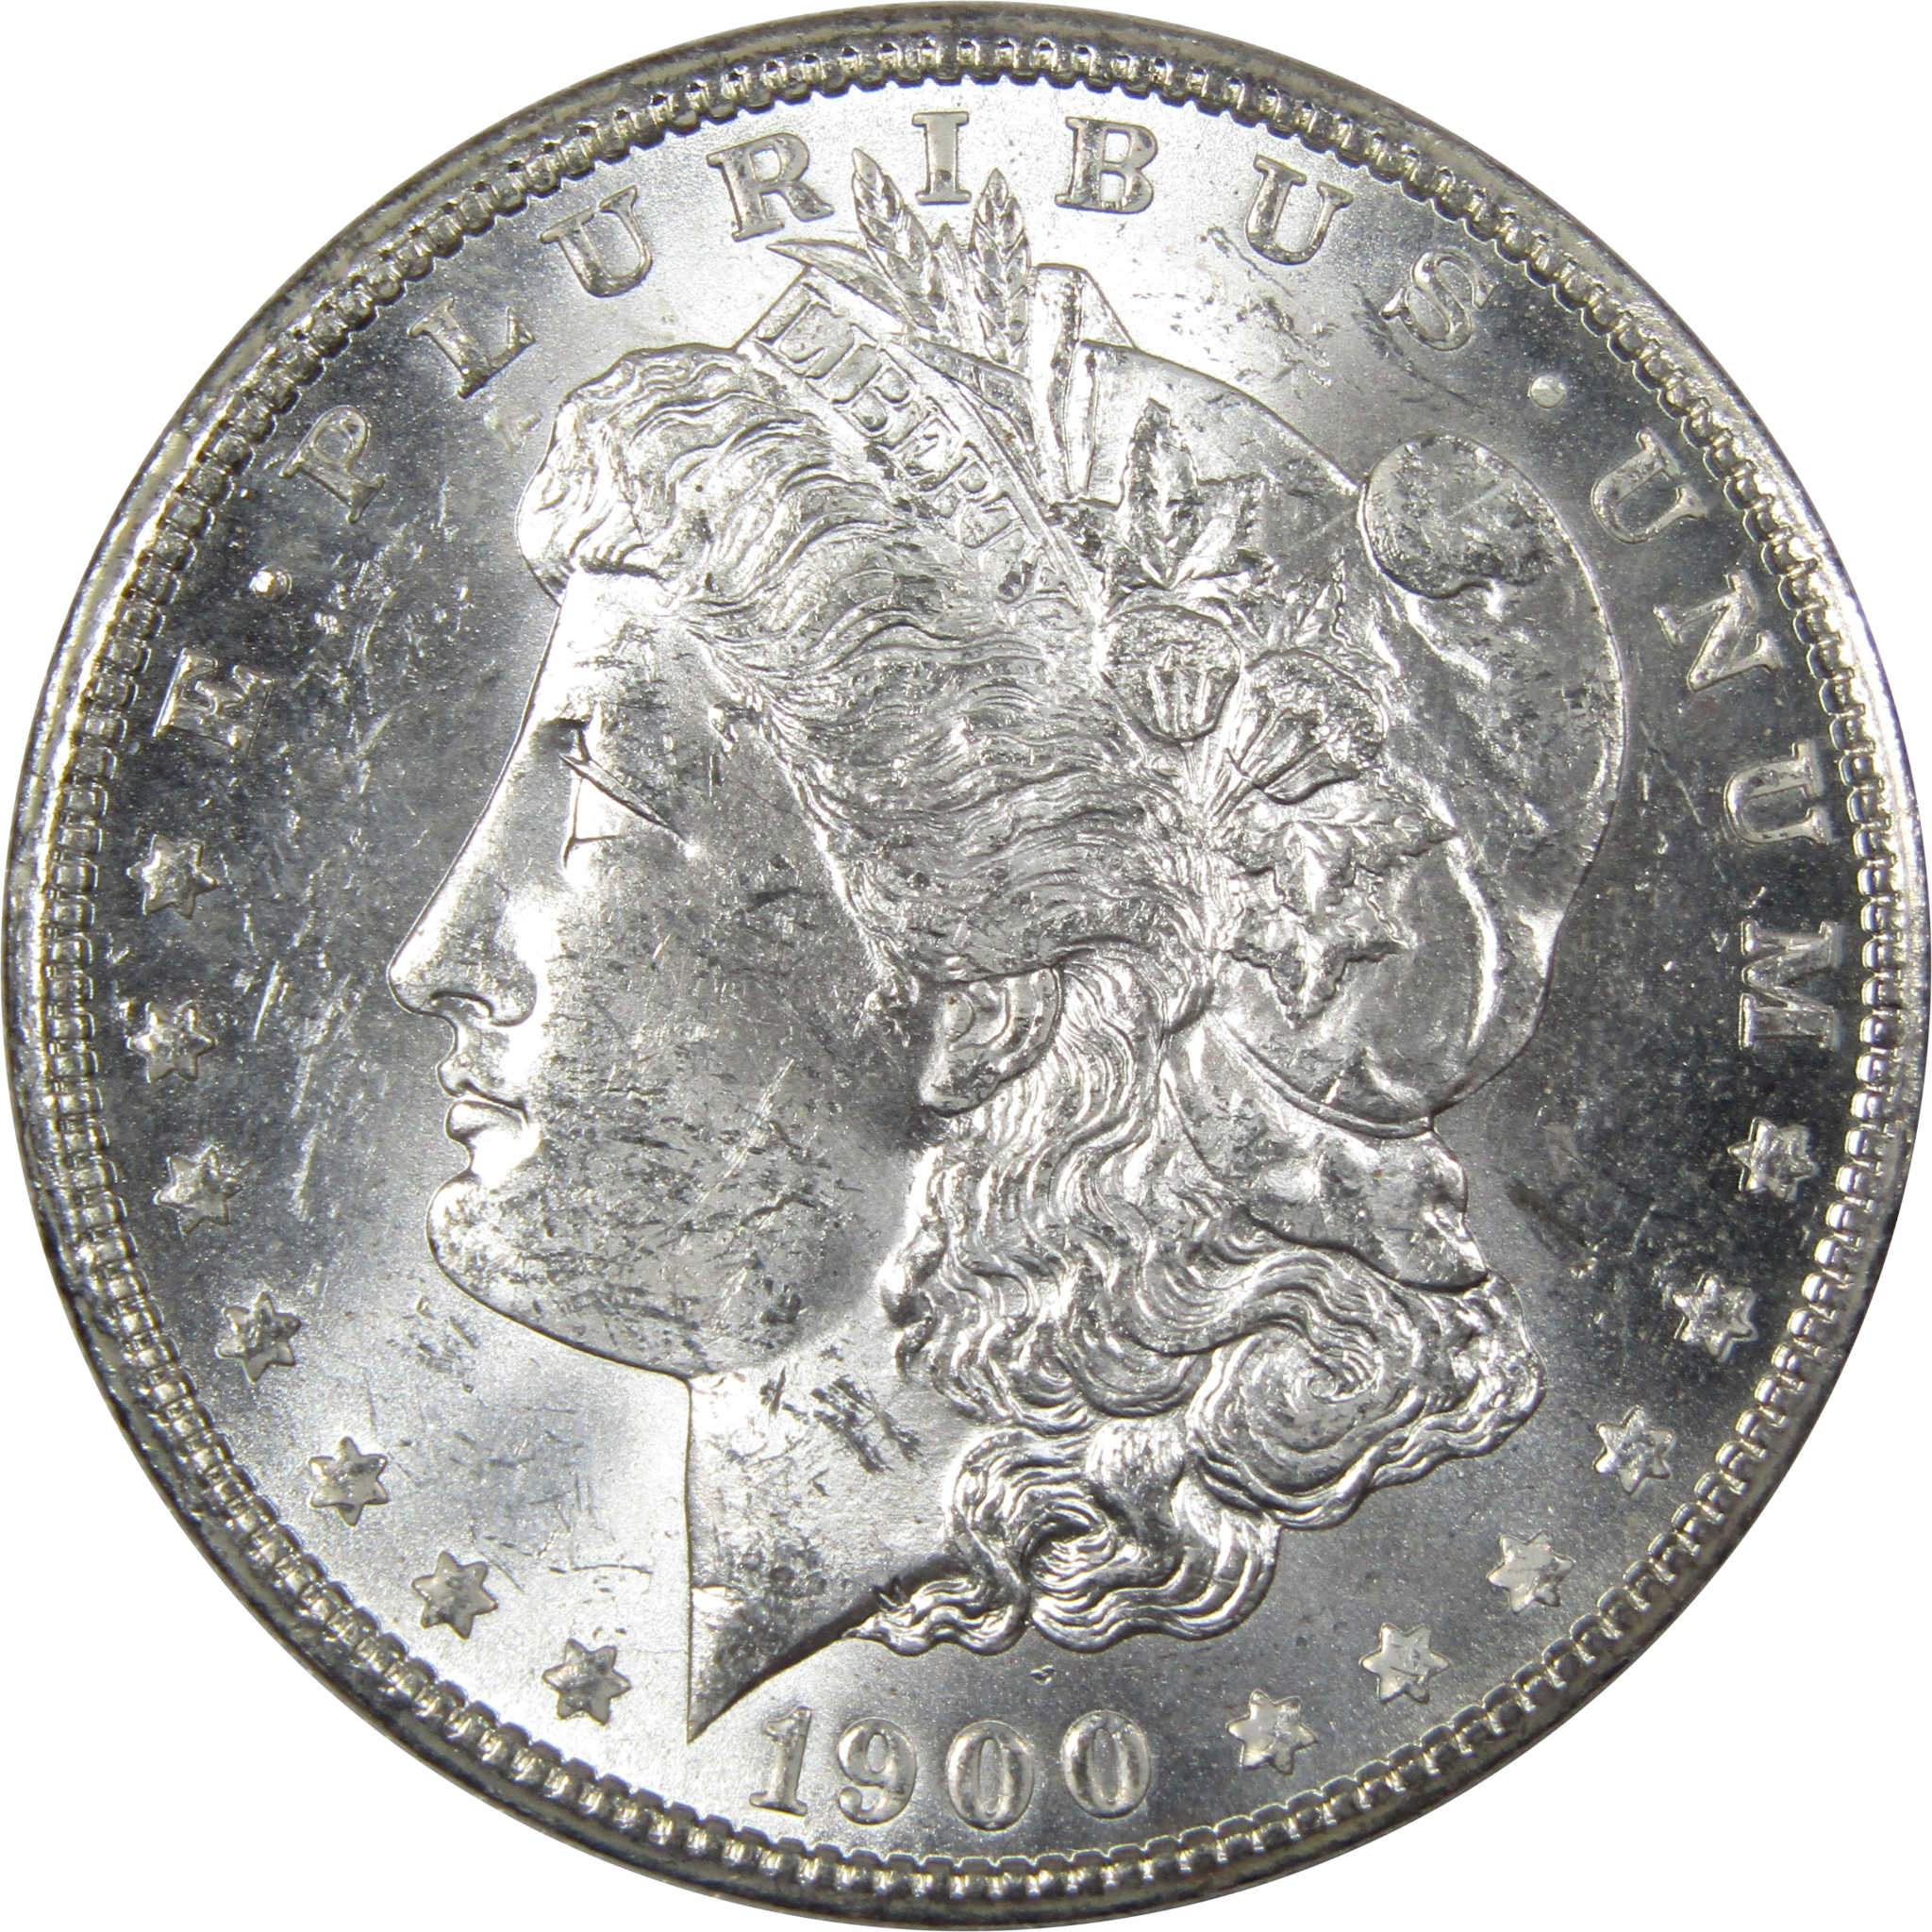 1900 O Morgan Dollar BU Uncirculated Mint State 90% Silver SKU:IPC9745 - Morgan coin - Morgan silver dollar - Morgan silver dollar for sale - Profile Coins &amp; Collectibles